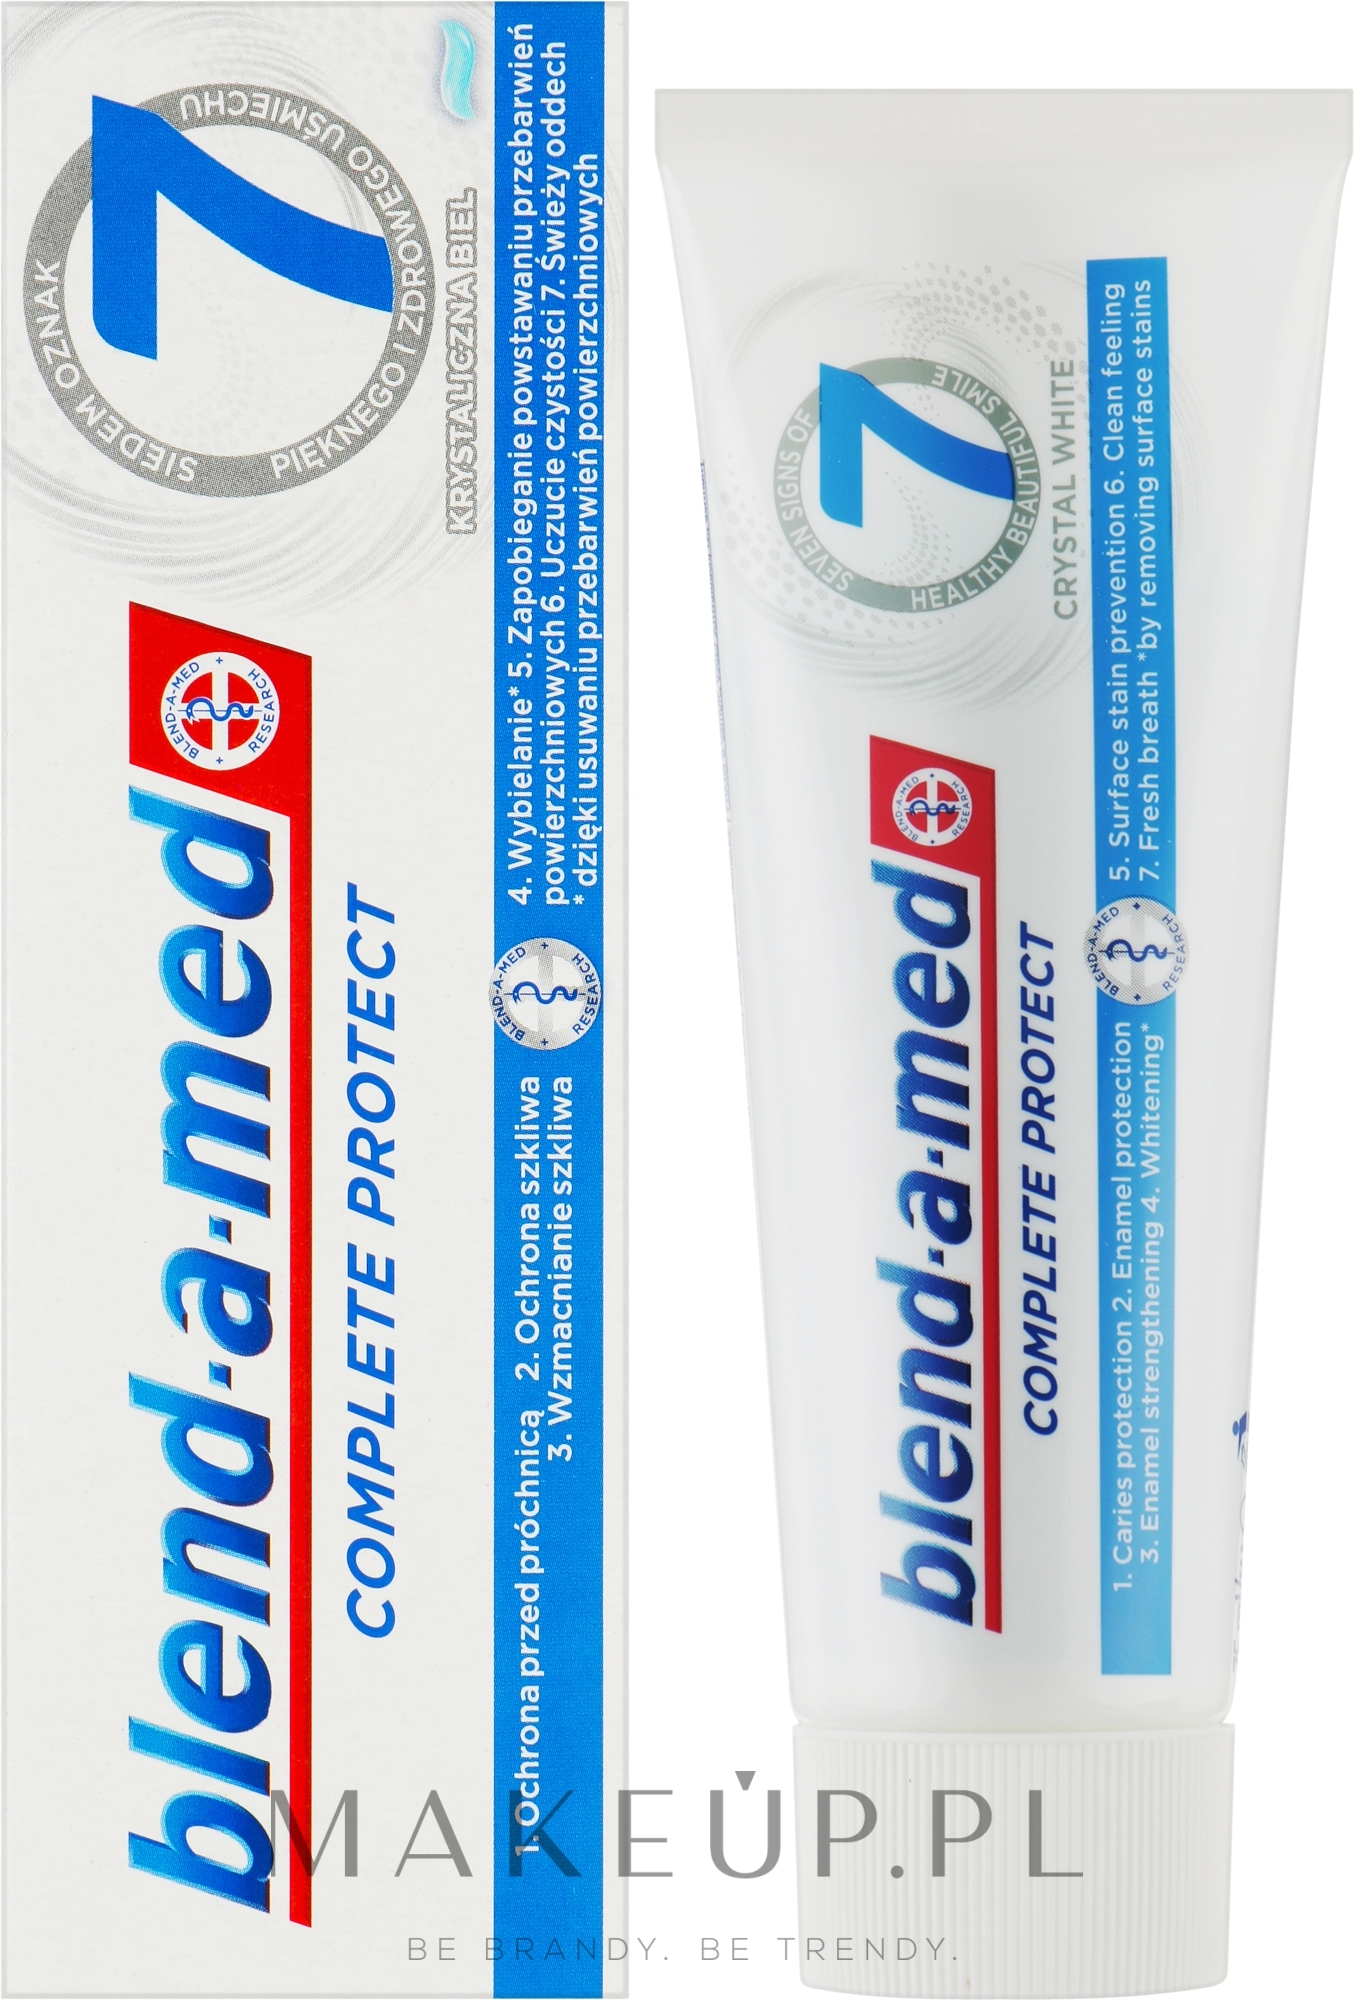 Wybielająca pasta do zębów - Blend-a-med Complete Protect 7 Crystal White Toothpaste — Zdjęcie 75 ml